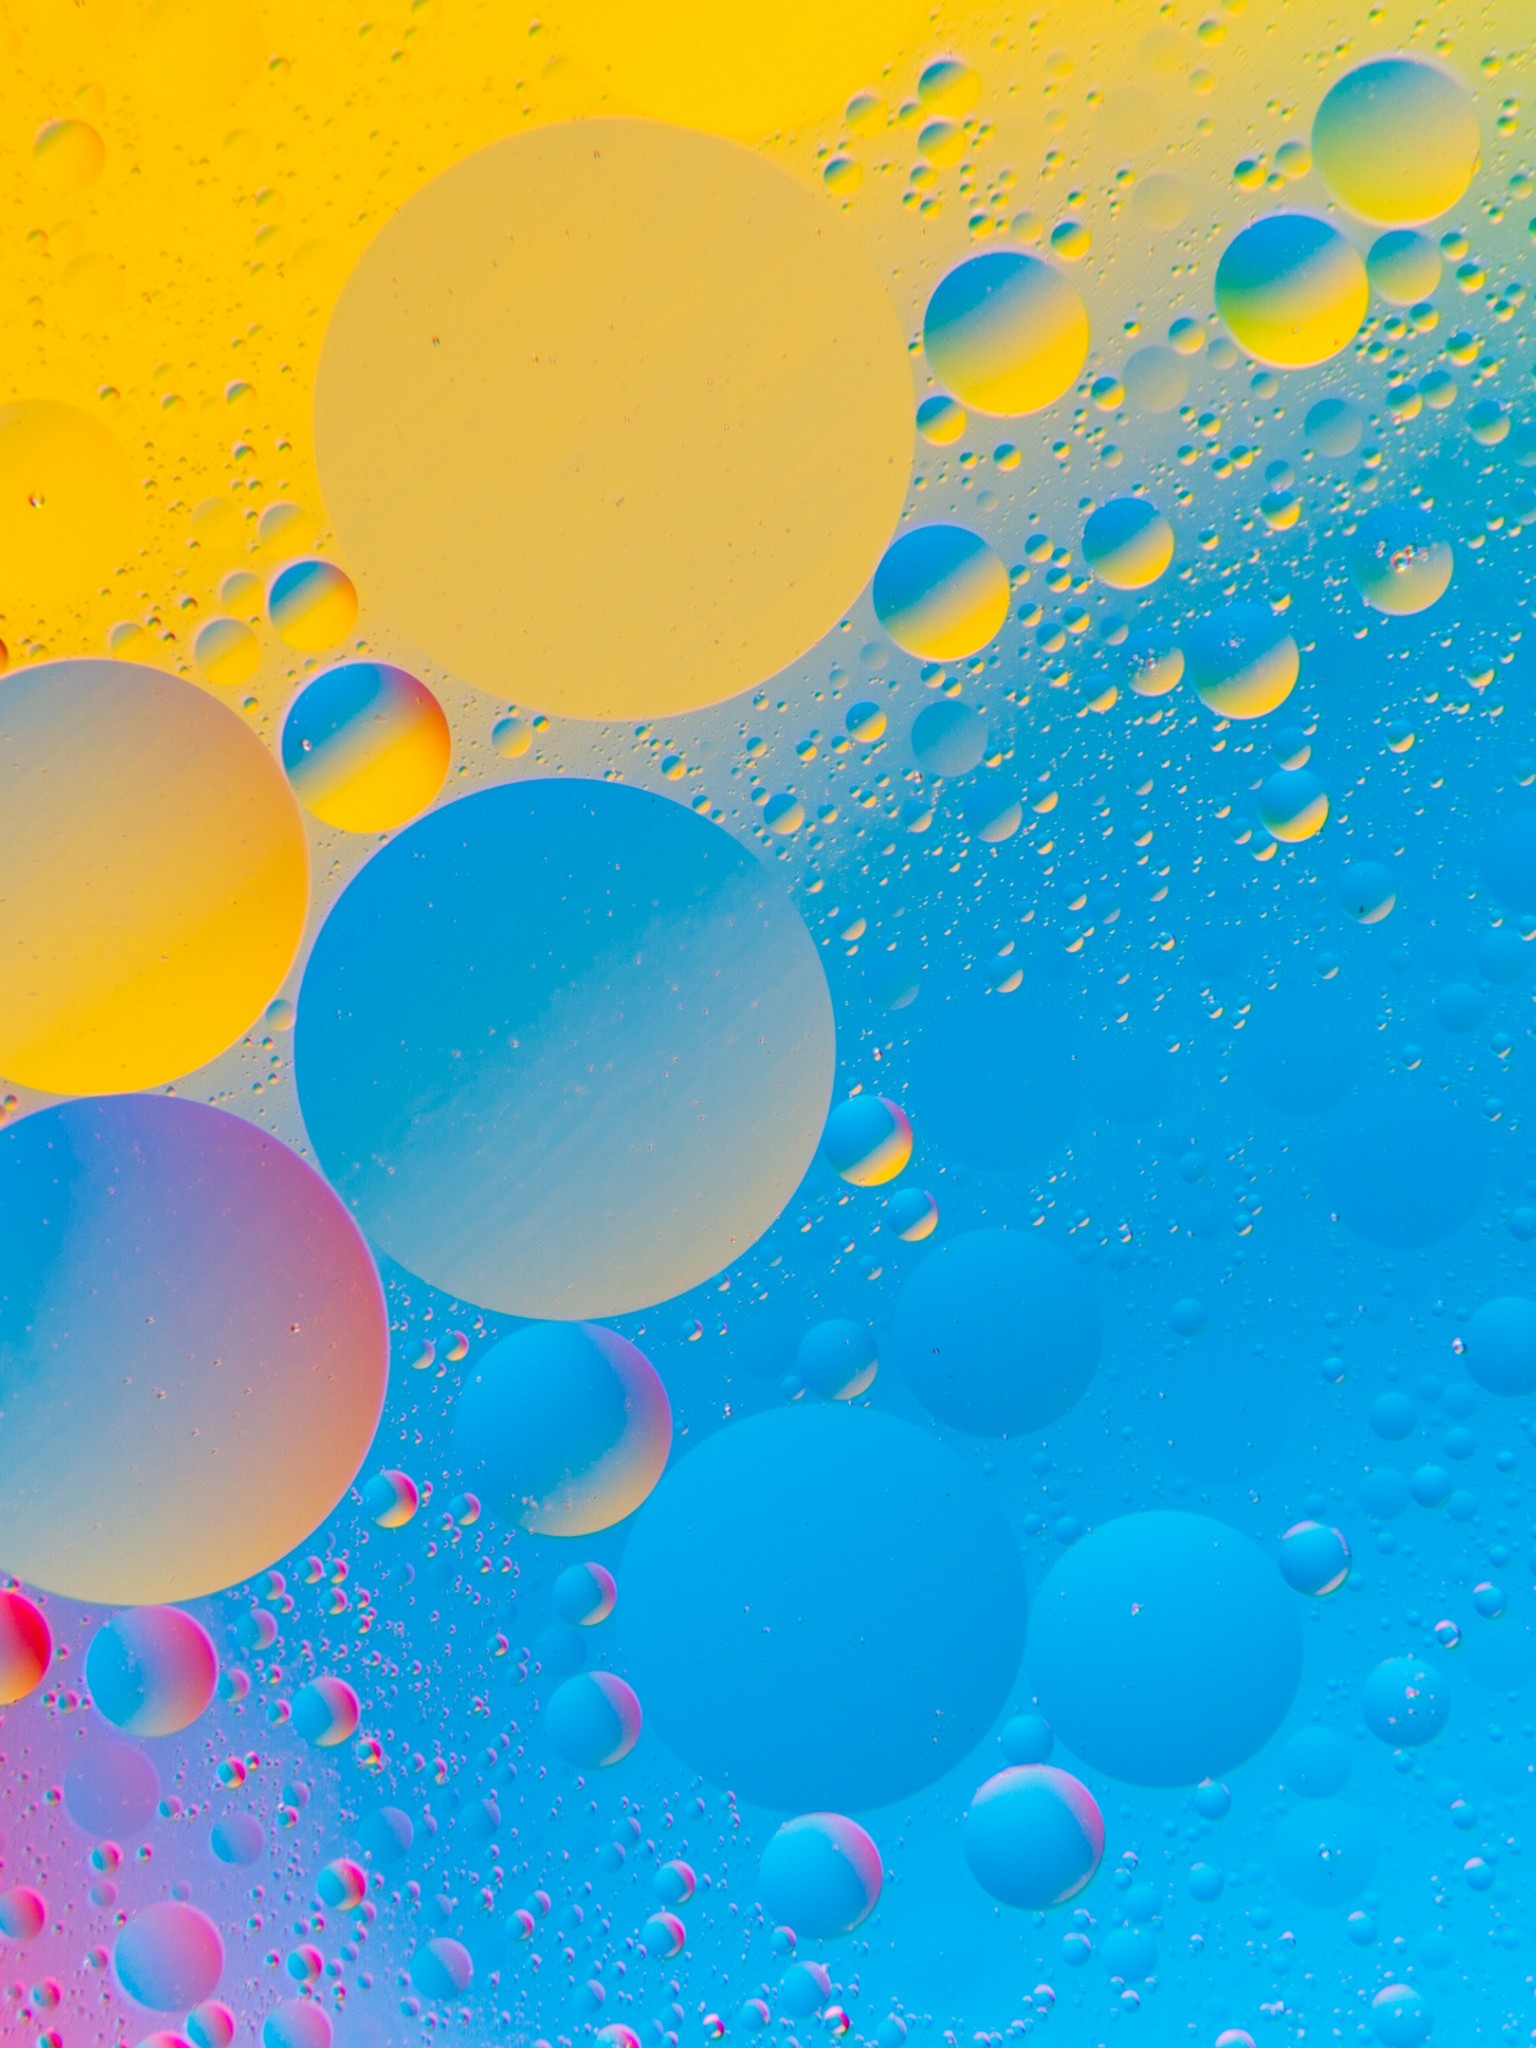 Colourful Bubbles 4k Hd Abstract Wallpaper Retina Ipad Hd Wallpaper Wallpapers Net